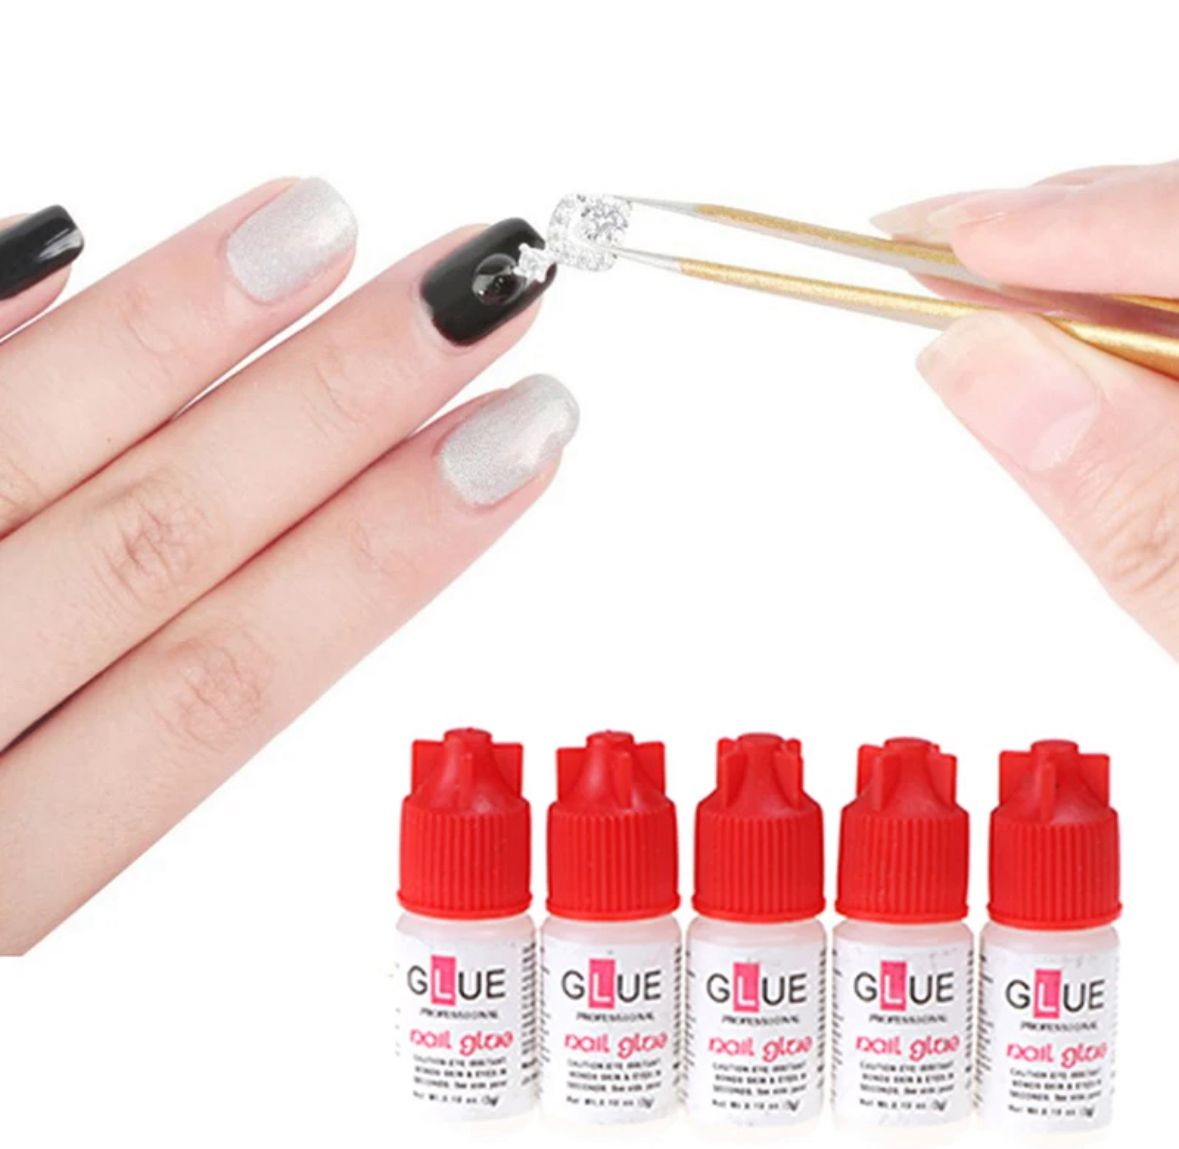 Pegamento para uñas nail glue x 5 unidades - marca glue